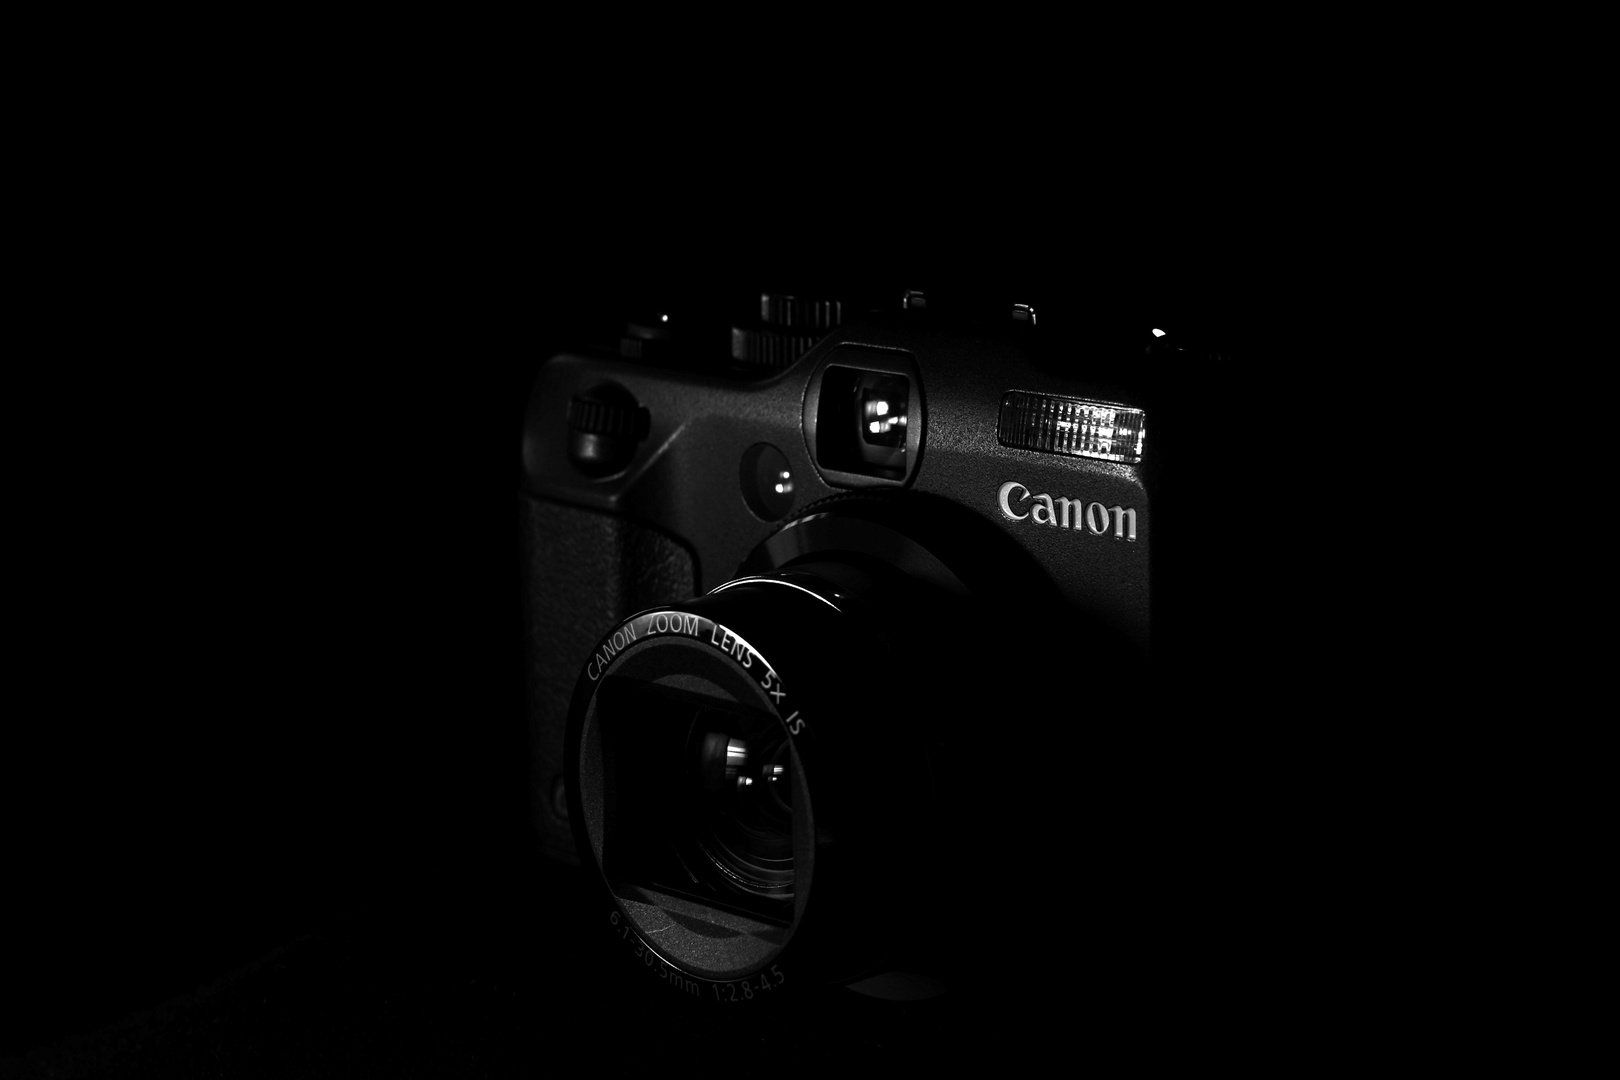 Canon Power Shot G12